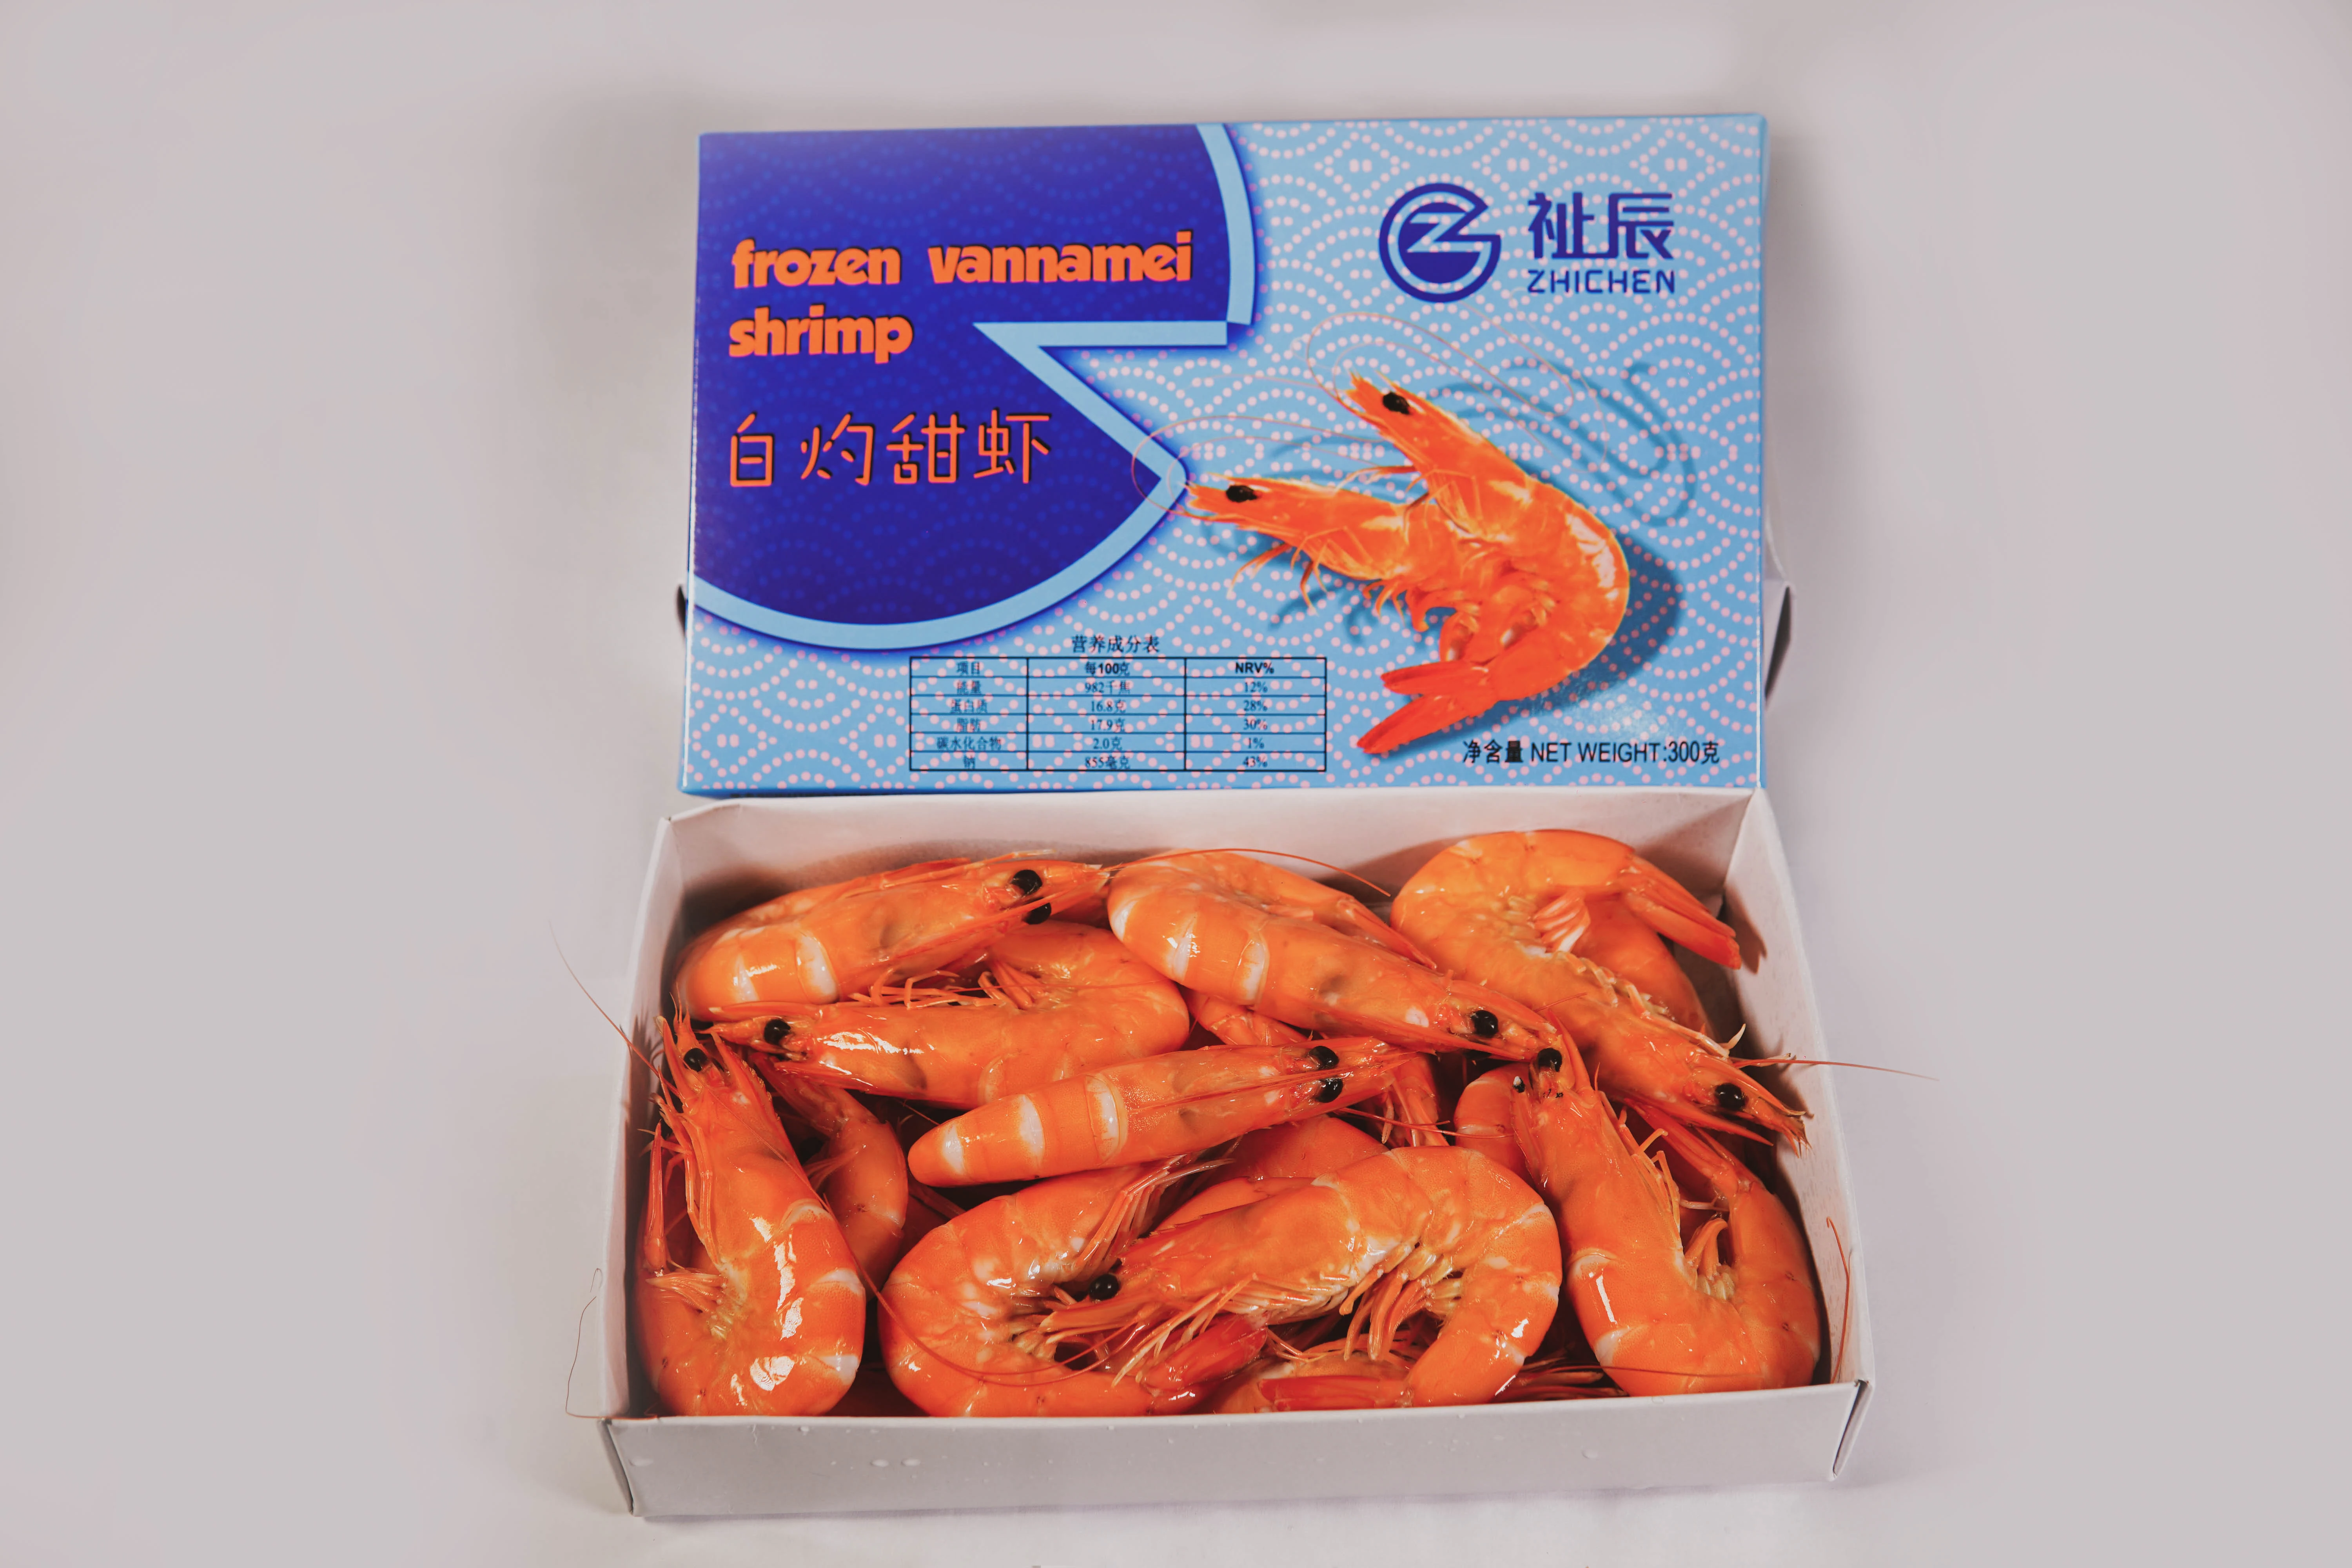 frozen vannamei shrimp(cooked shrimp) from vietnam carton packaging haccp quality export